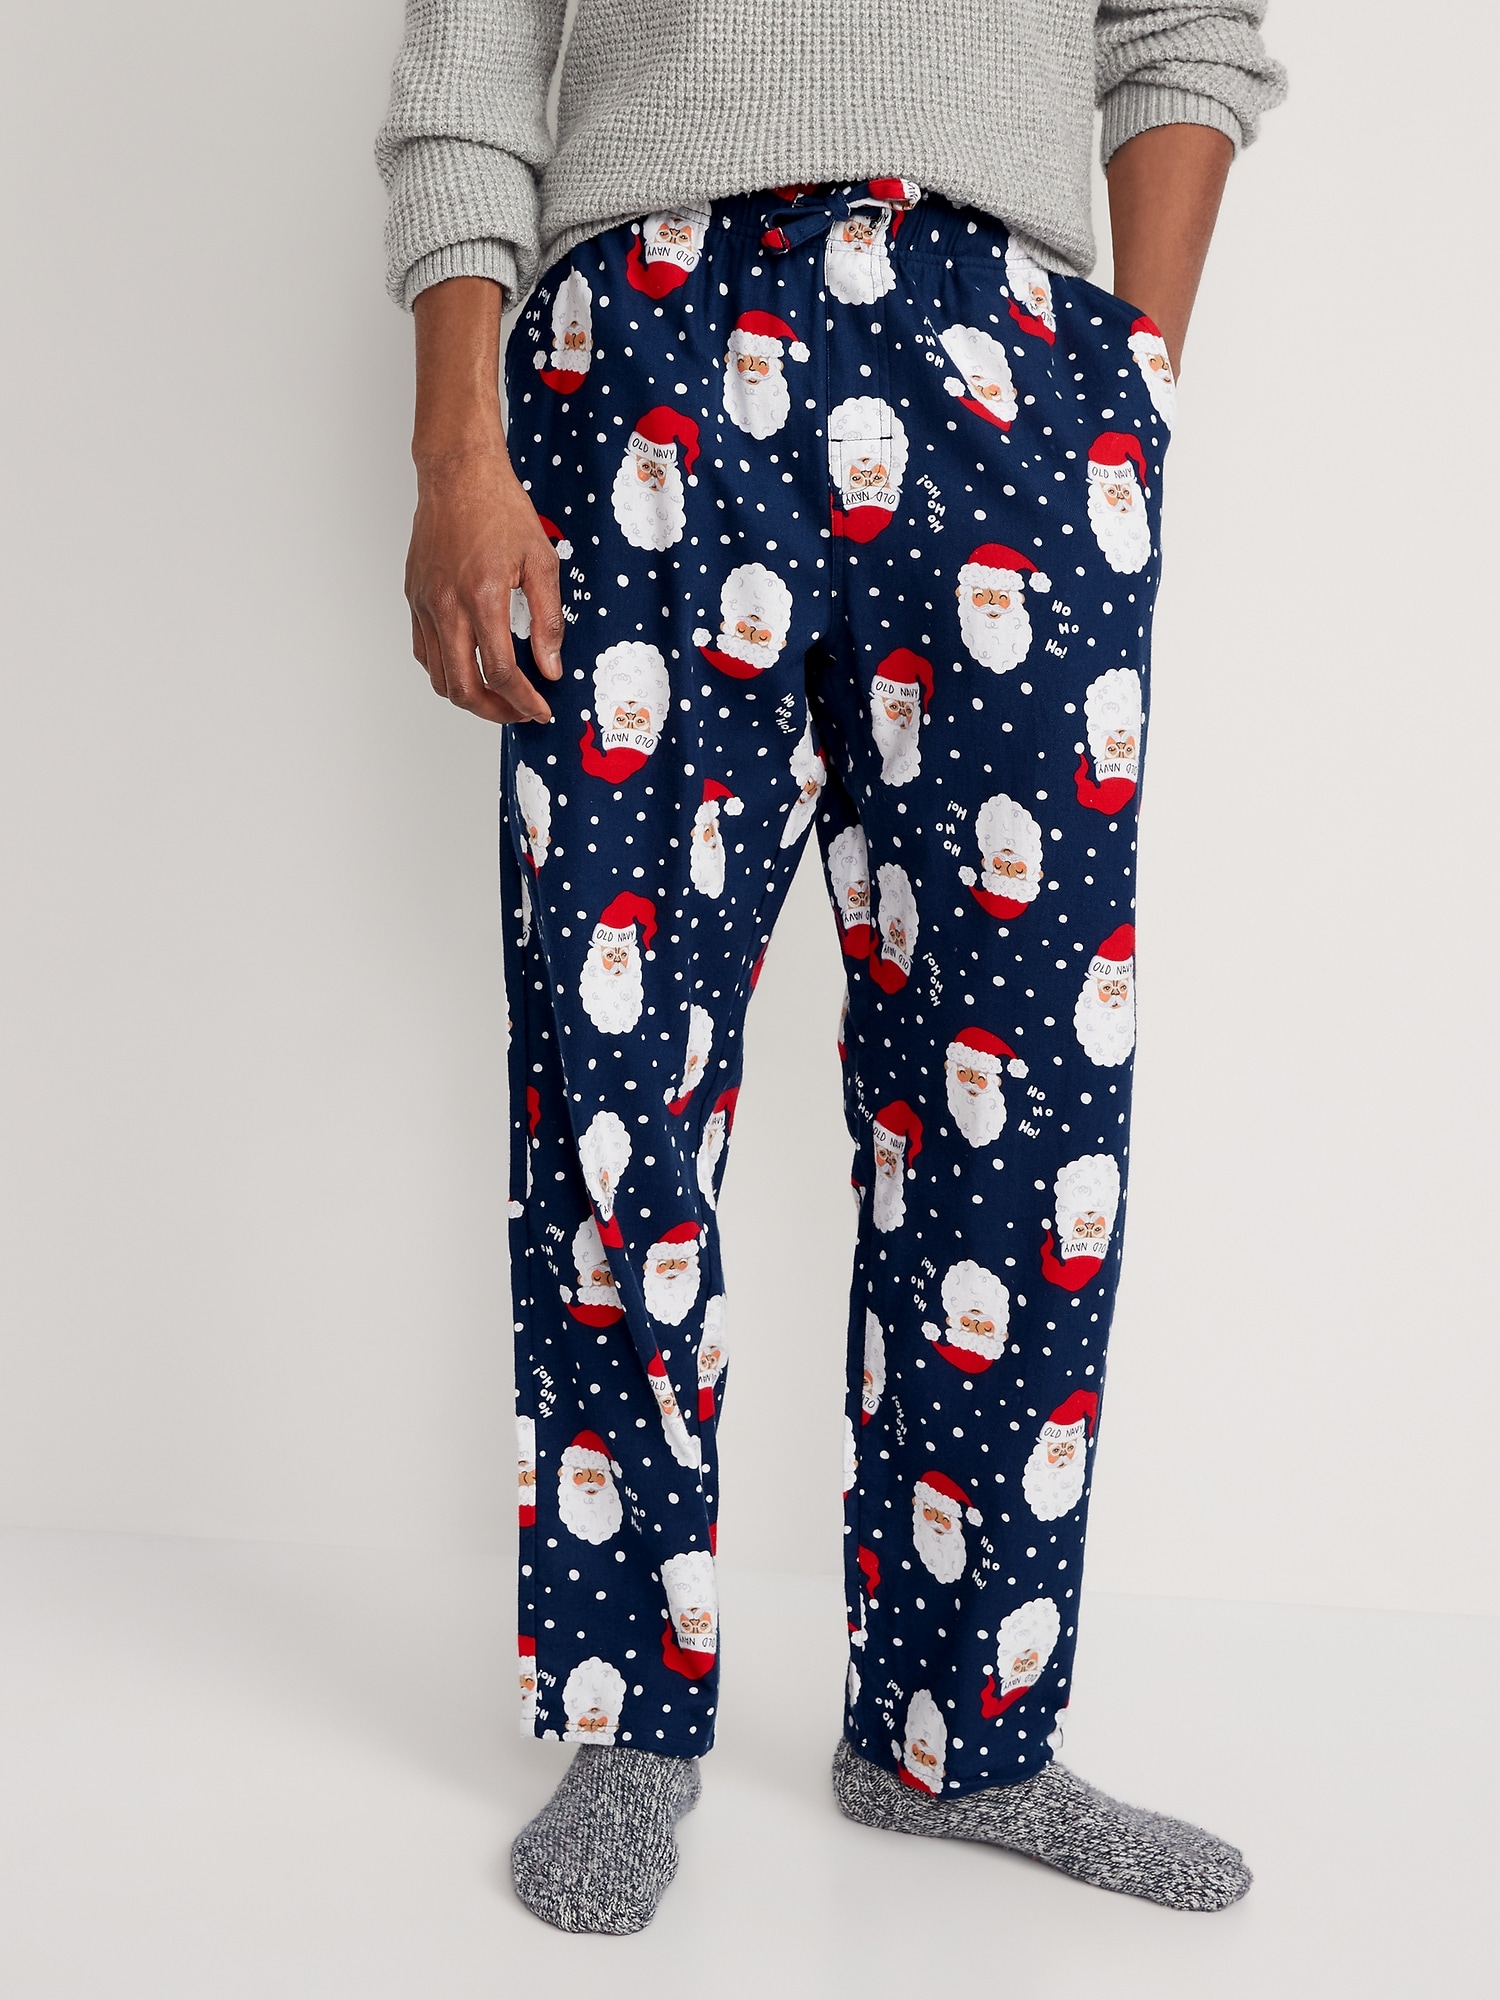 Old Navy Printed Flannel Pajama Pants for Men brown. 1